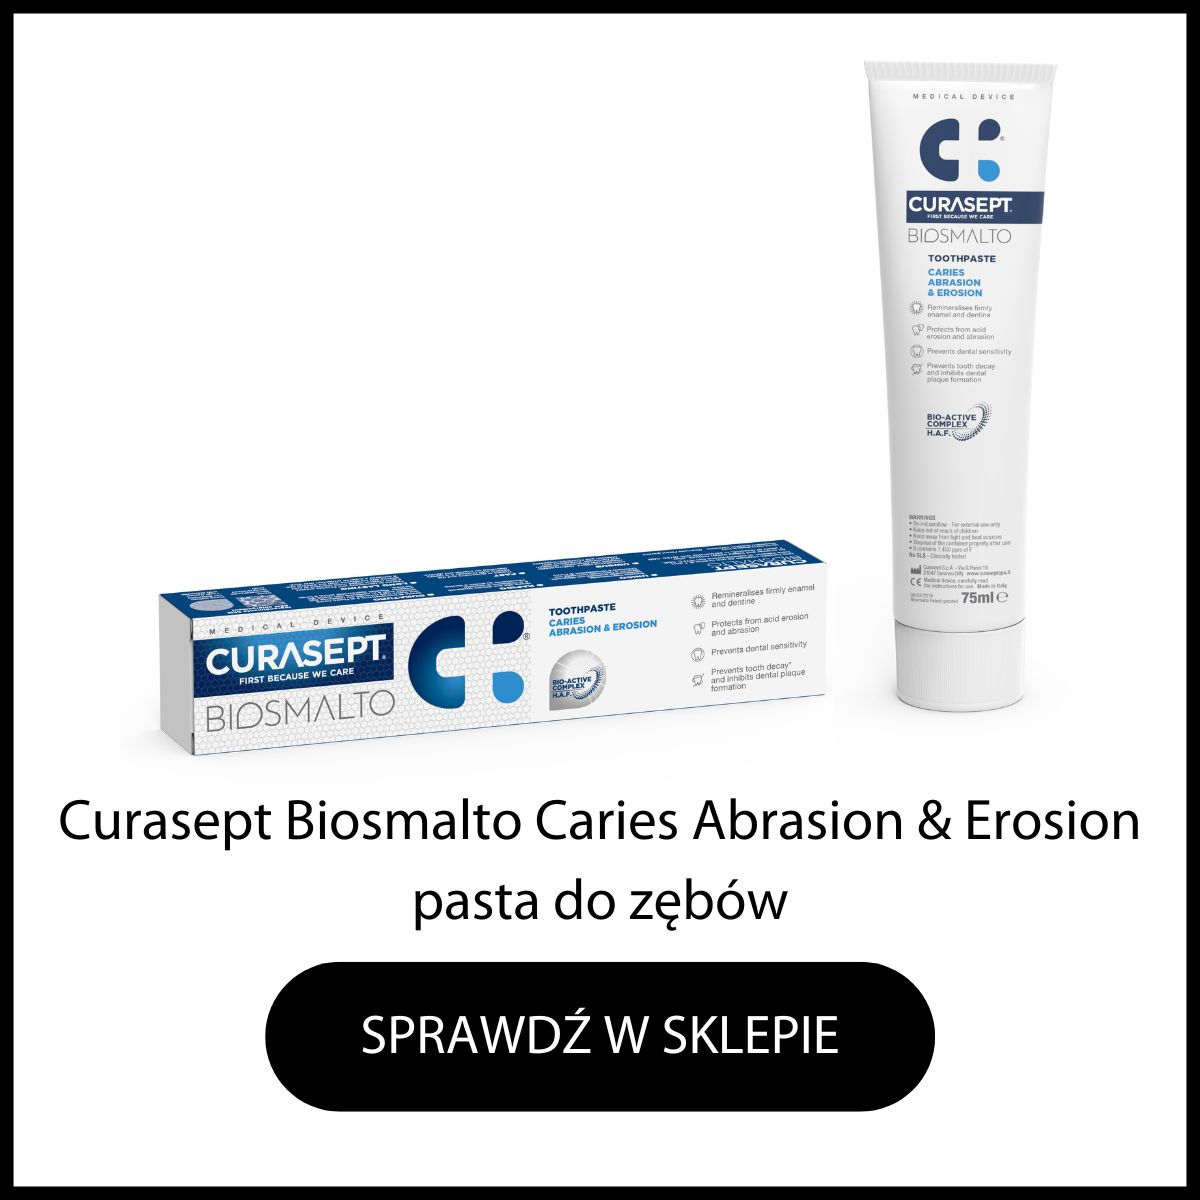 Curasept biosmalto Caries Abrasion and Erosion pasta do zębów wrażliwych